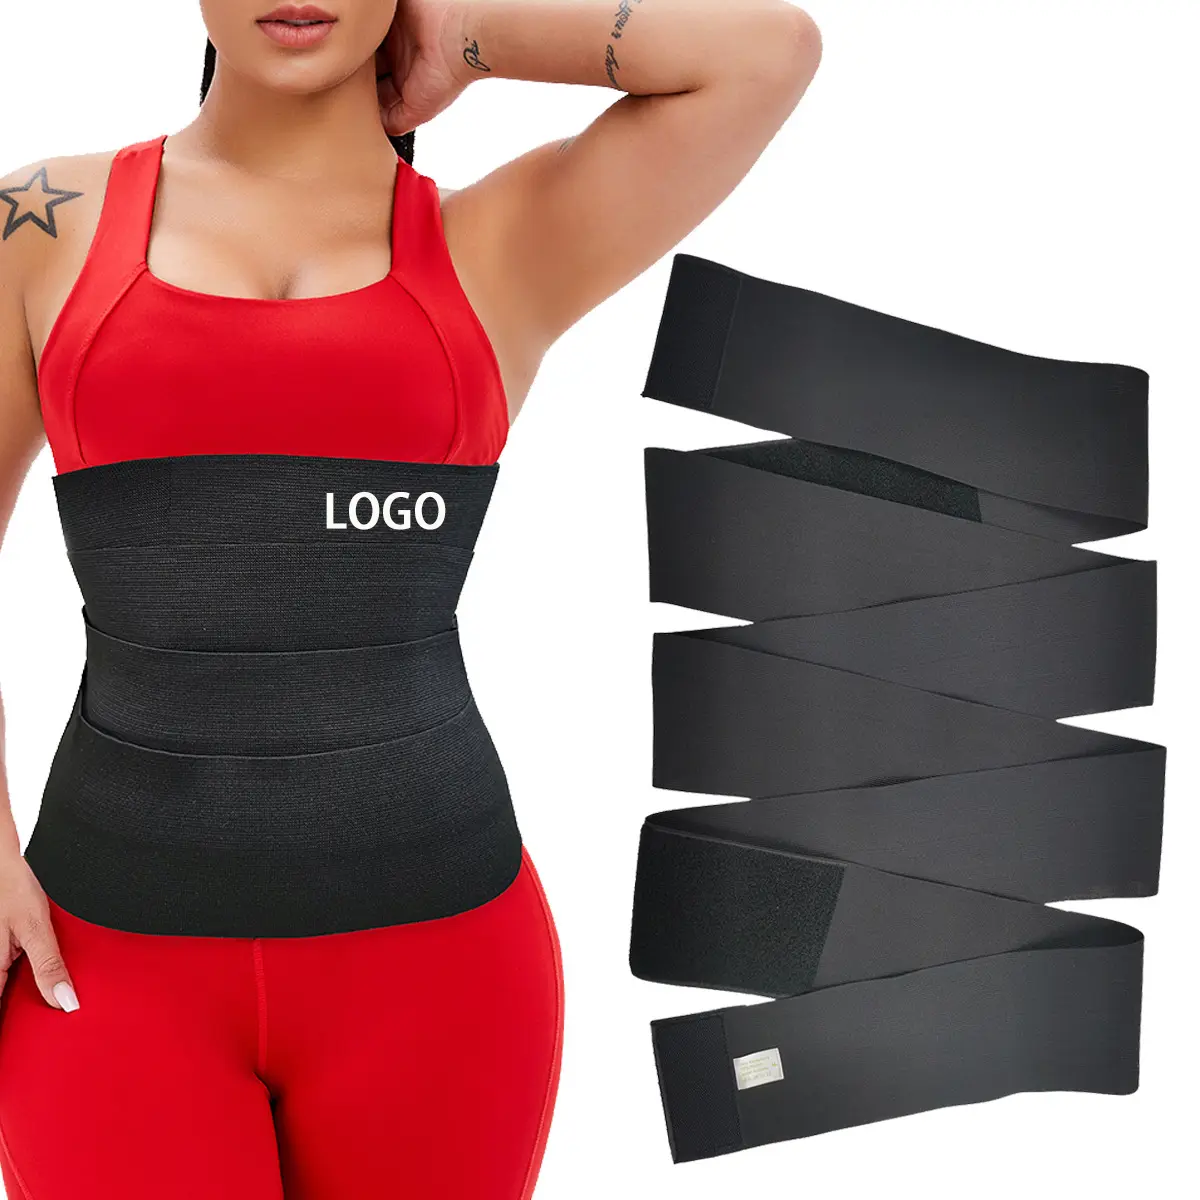 Landora Free Size Waist Trainer Corset Flat Belly Shaper Re Usable Black Strip Bandage Long Elastic Band Tummy Wrap